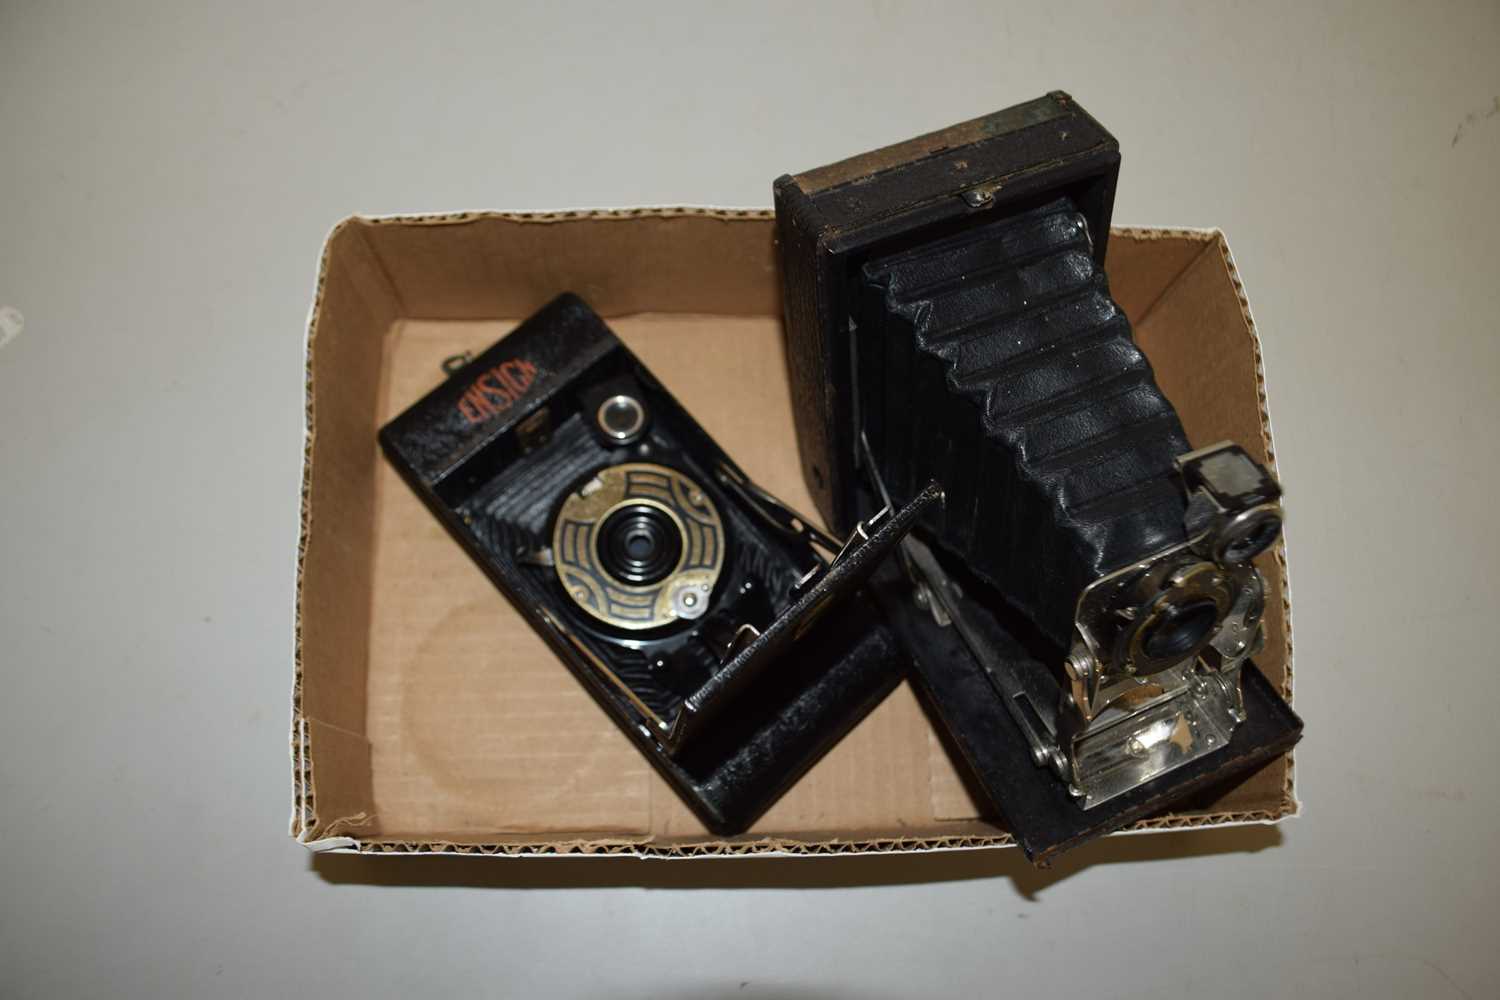 Two vintage cameras by Ensign & Kodak